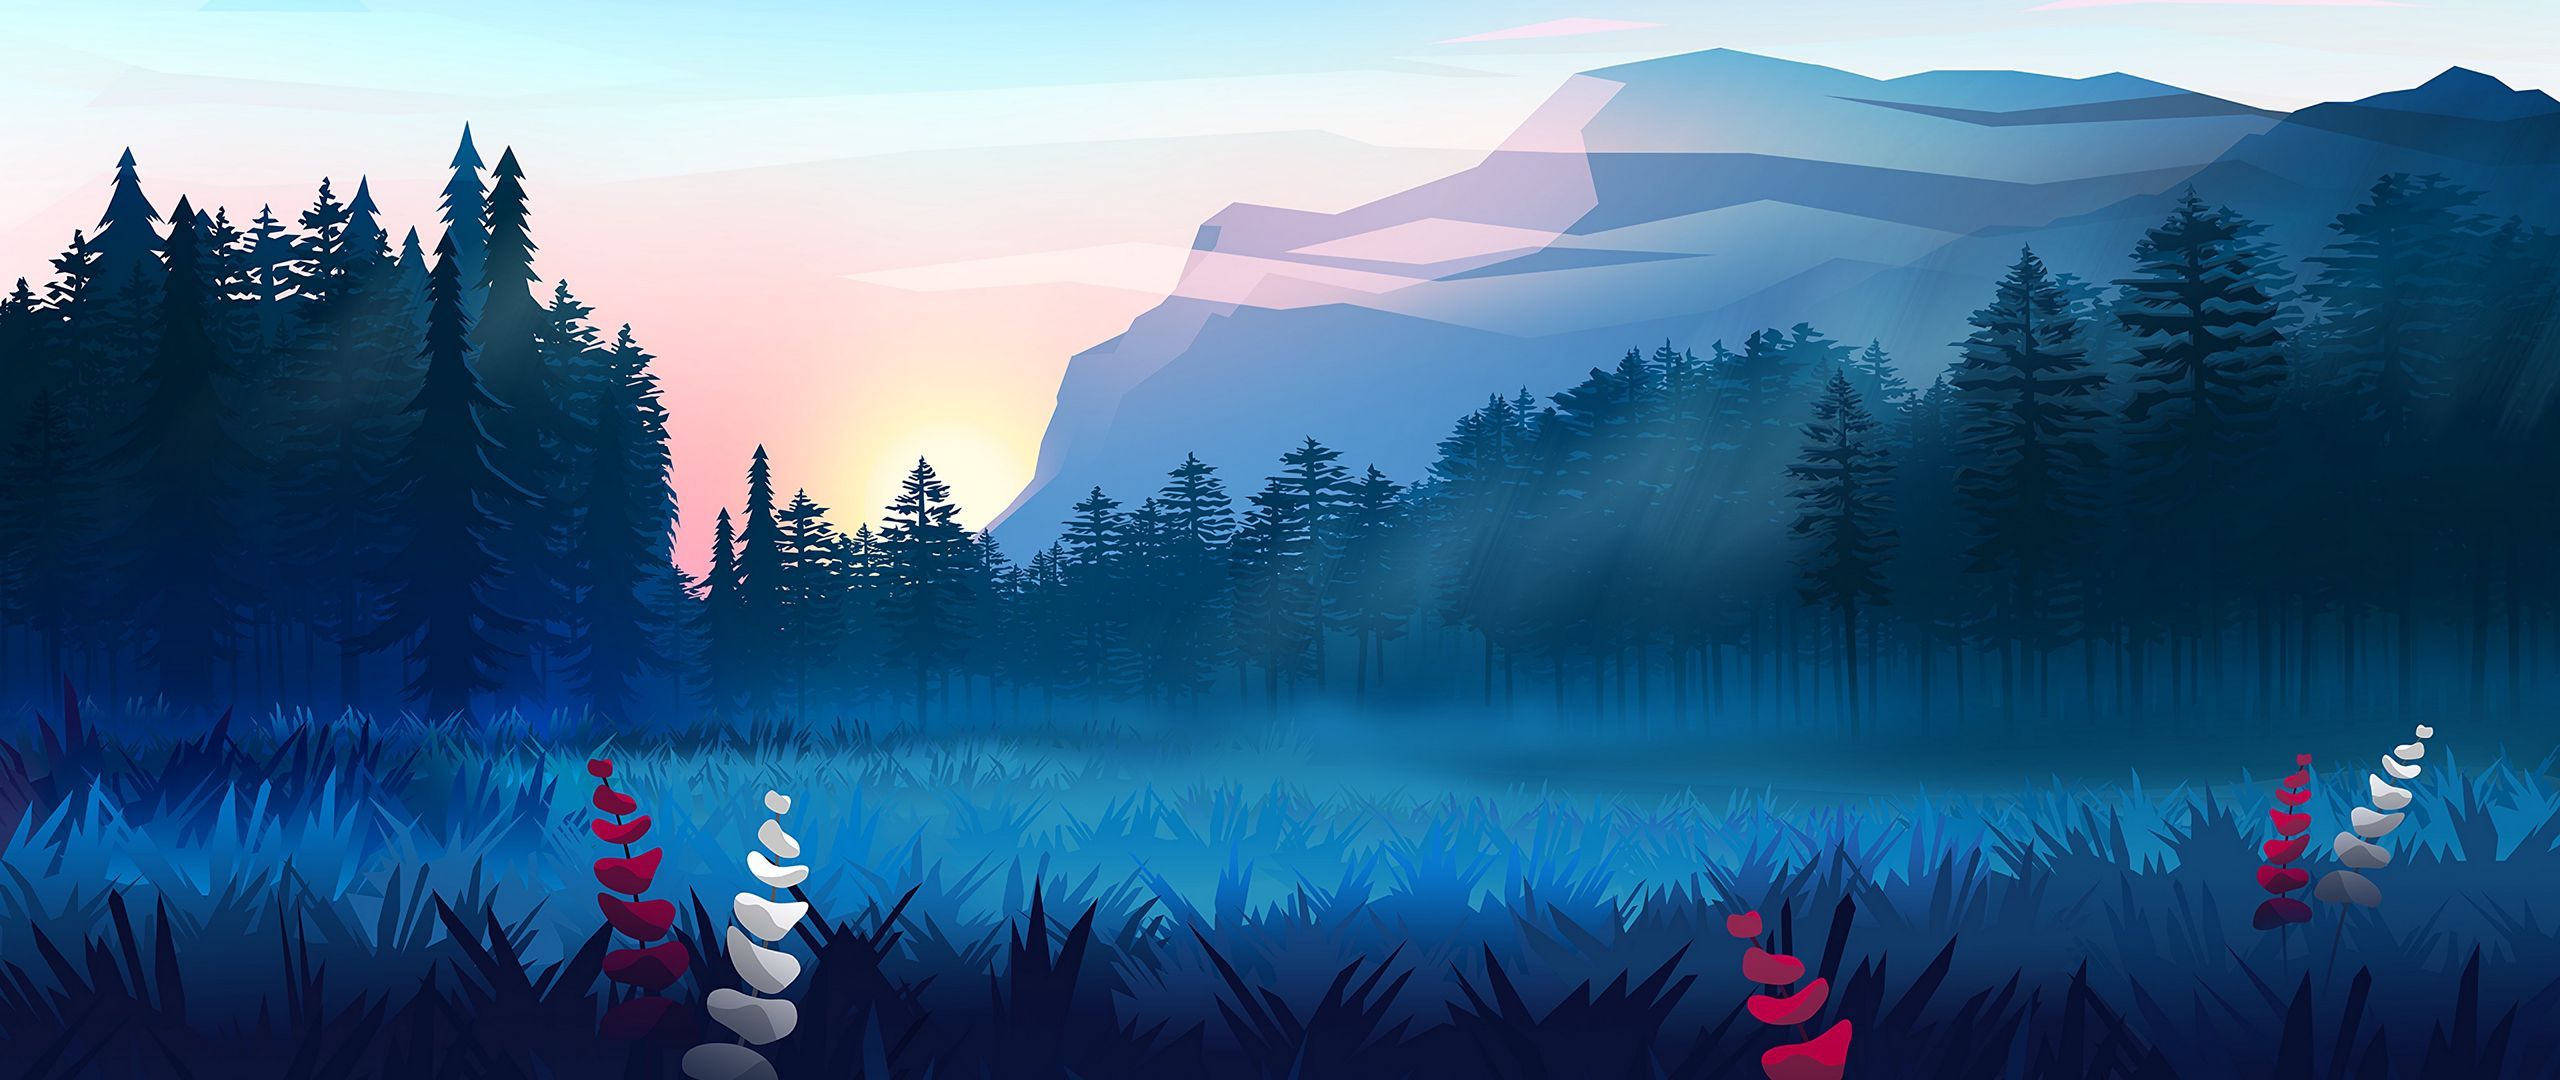 Download wallpaper 2560x1080 lawn, forest, mountains, fog, landscape, art dual wide 1080p HD background